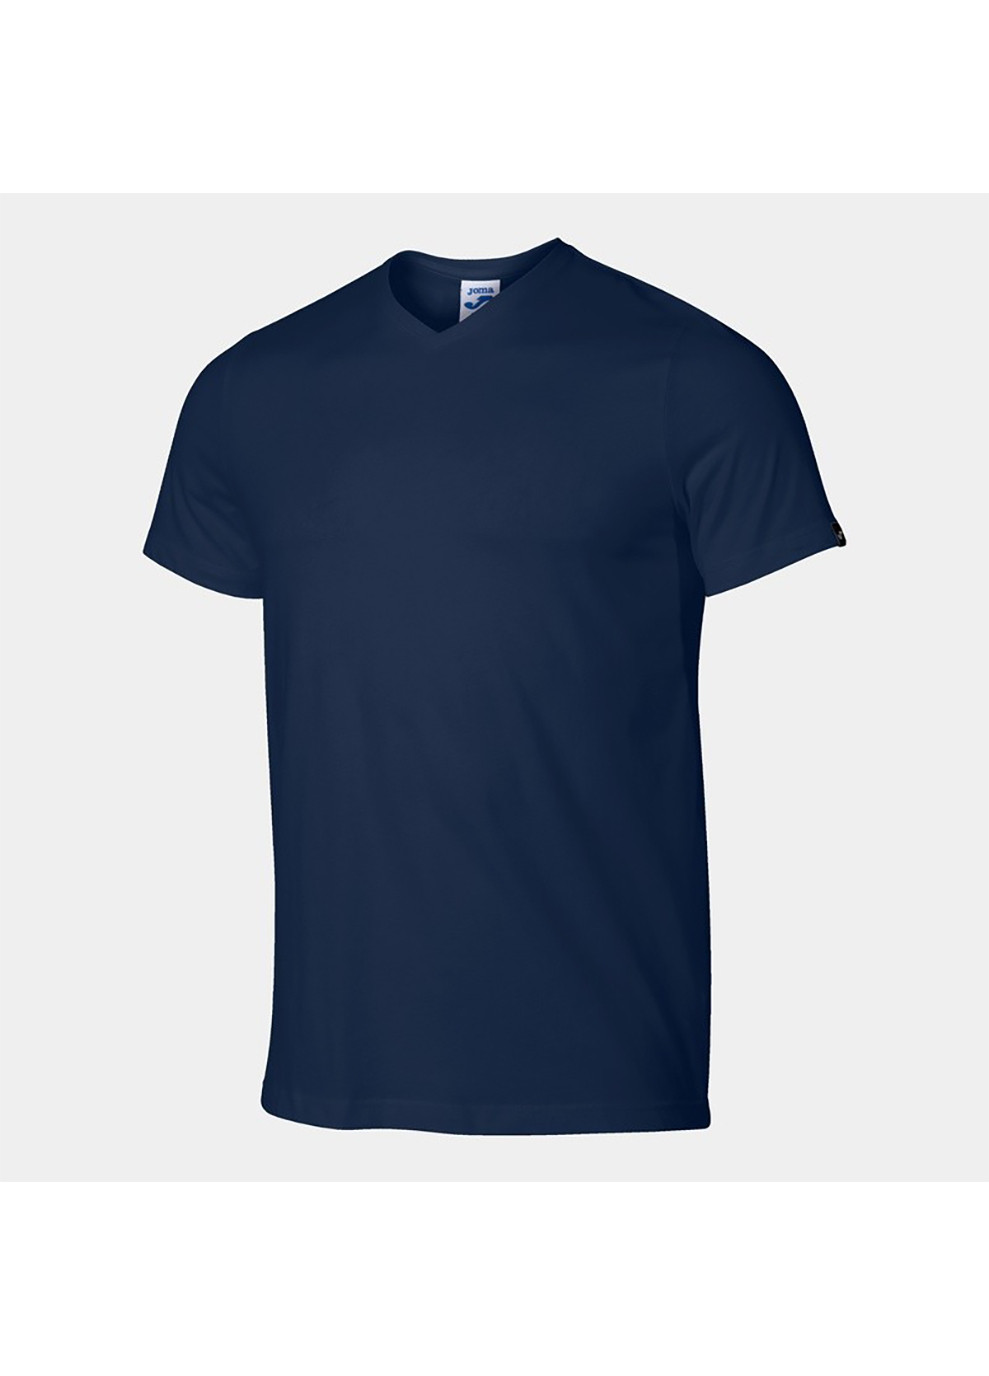 Синяя футболка versalles short sleeve t-shirt синий Joma